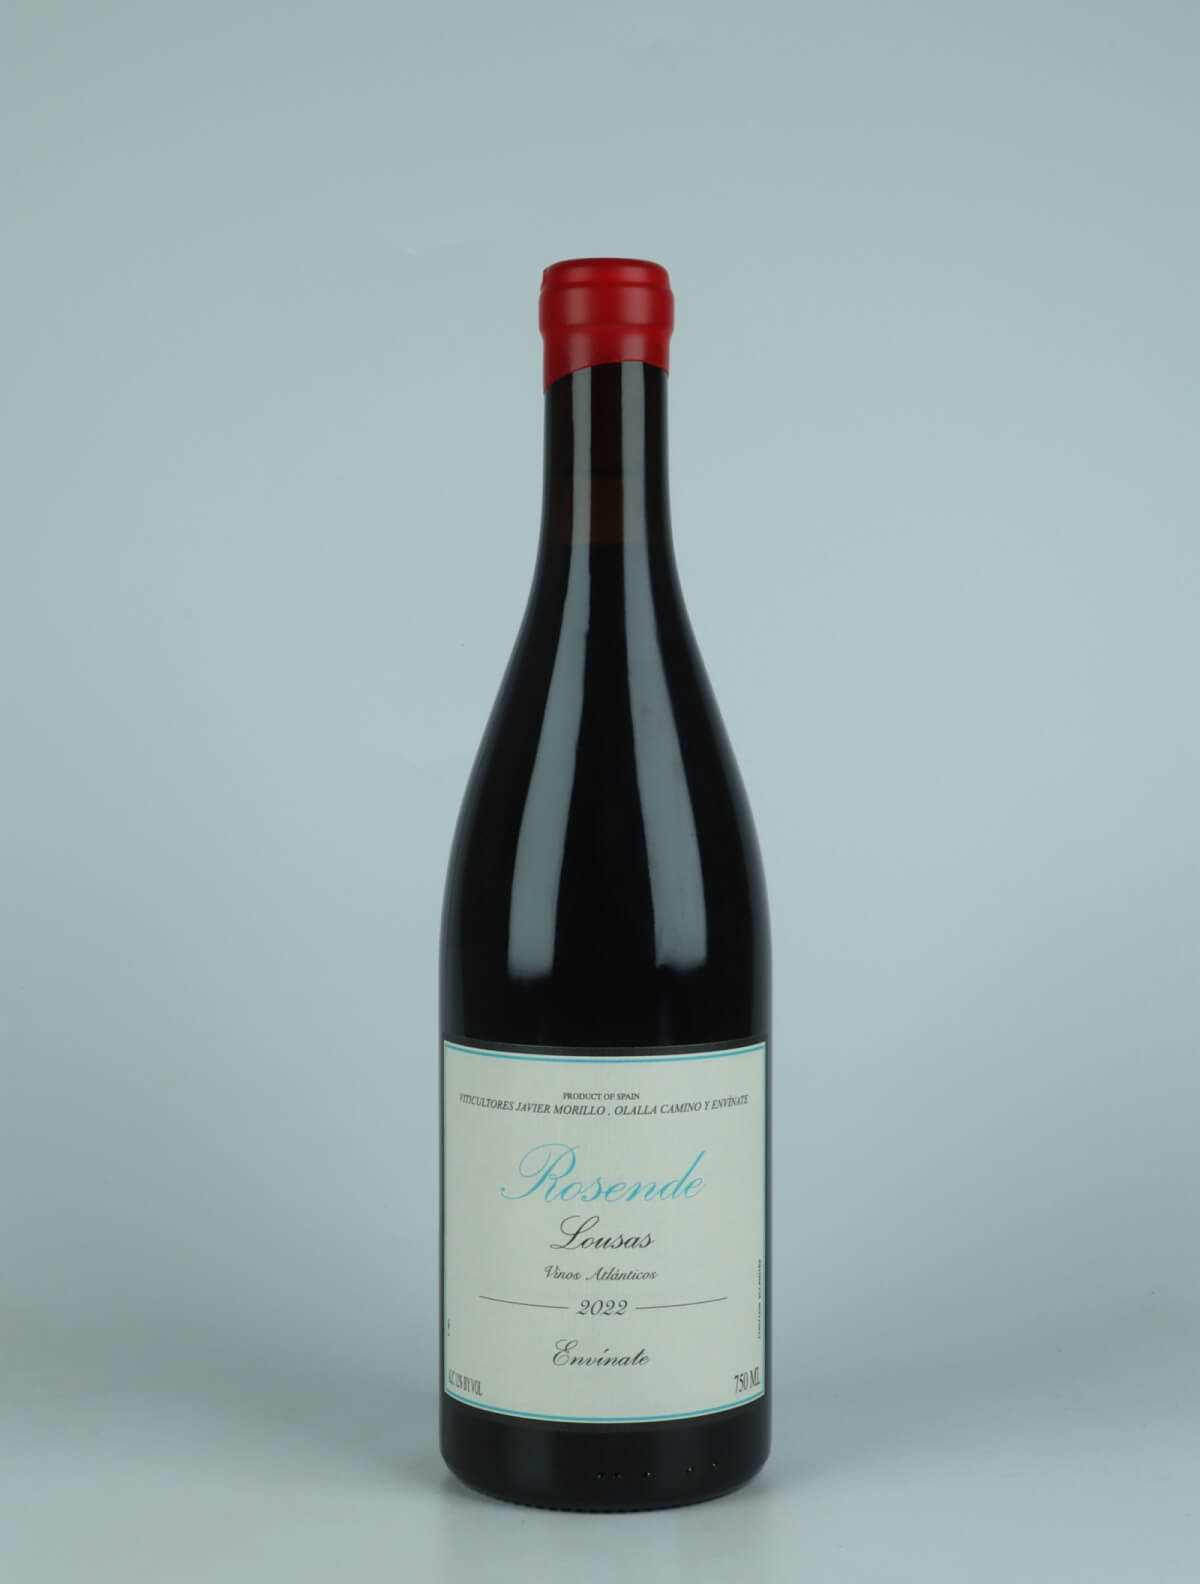 A bottle 2022 Rosende - Ribeira Sacra Red wine from Envínate, Ribeira Sacra in Spain